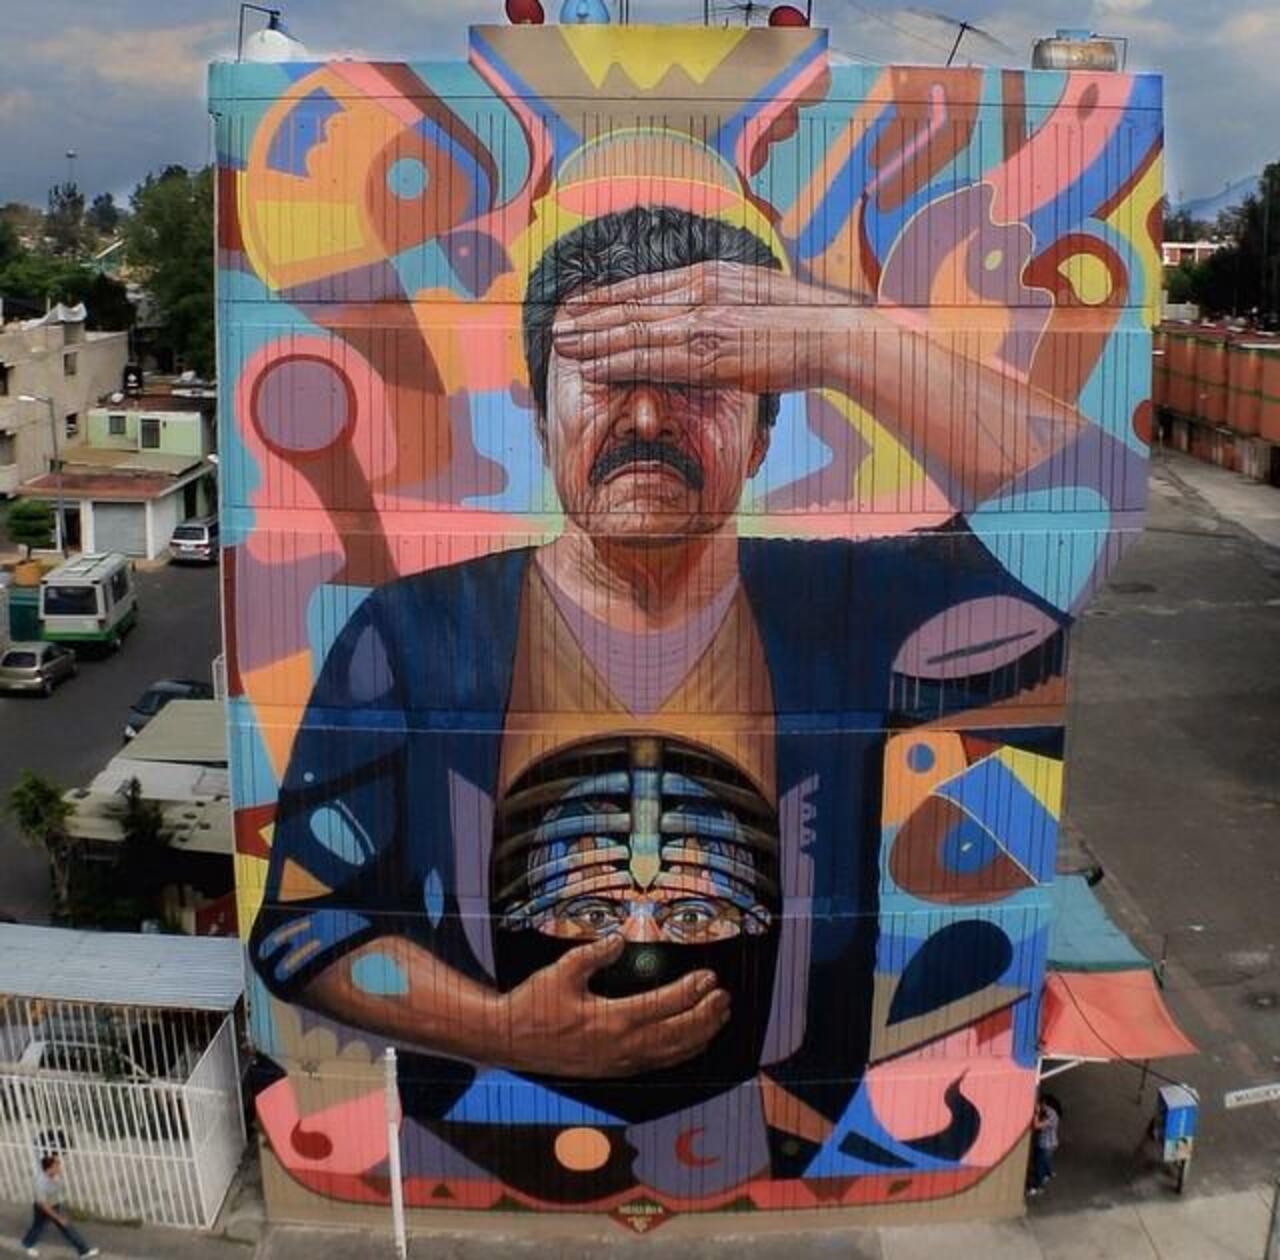 Large scale Street Art by the artist Daniel Cortez 

#art #mural #graffiti #streetart http://t.co/E5GIw0HNUG